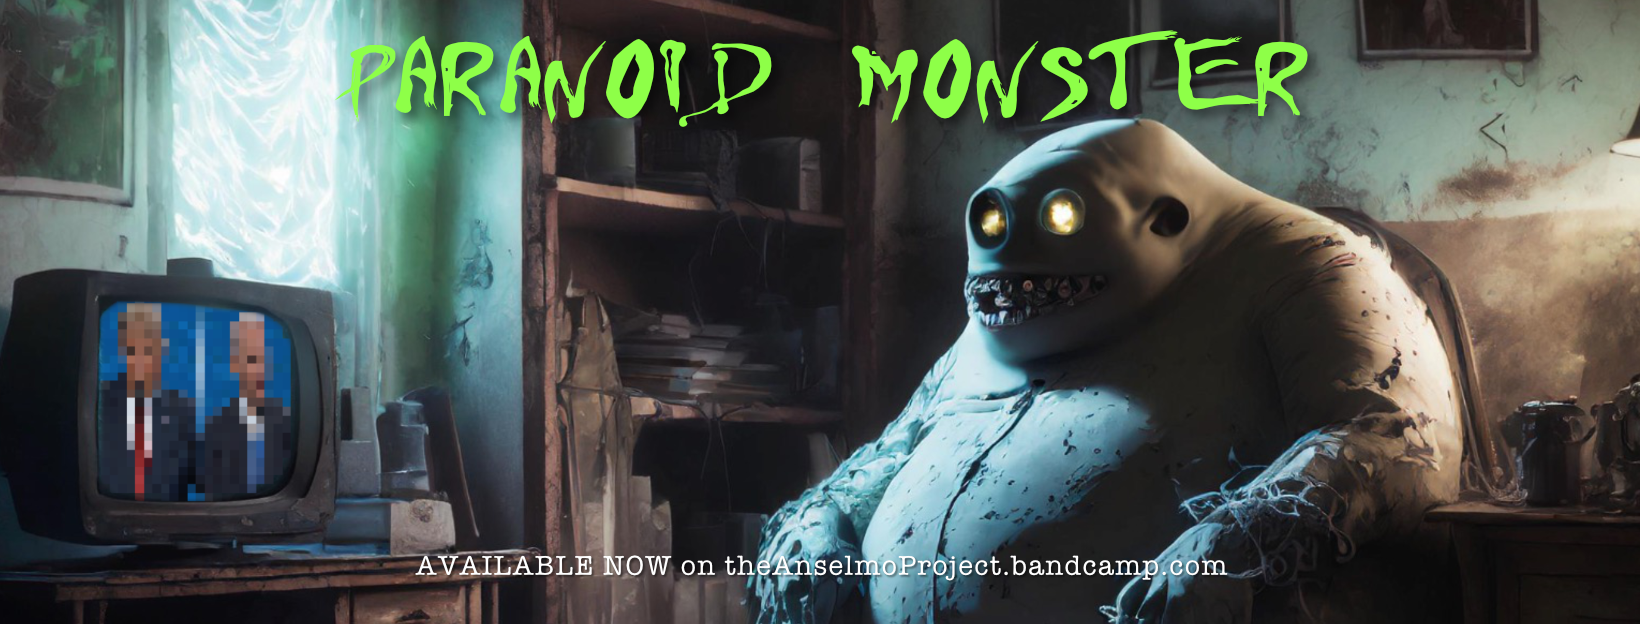 The Anselmo Project - Paranoid Monster Progressive Rock Single